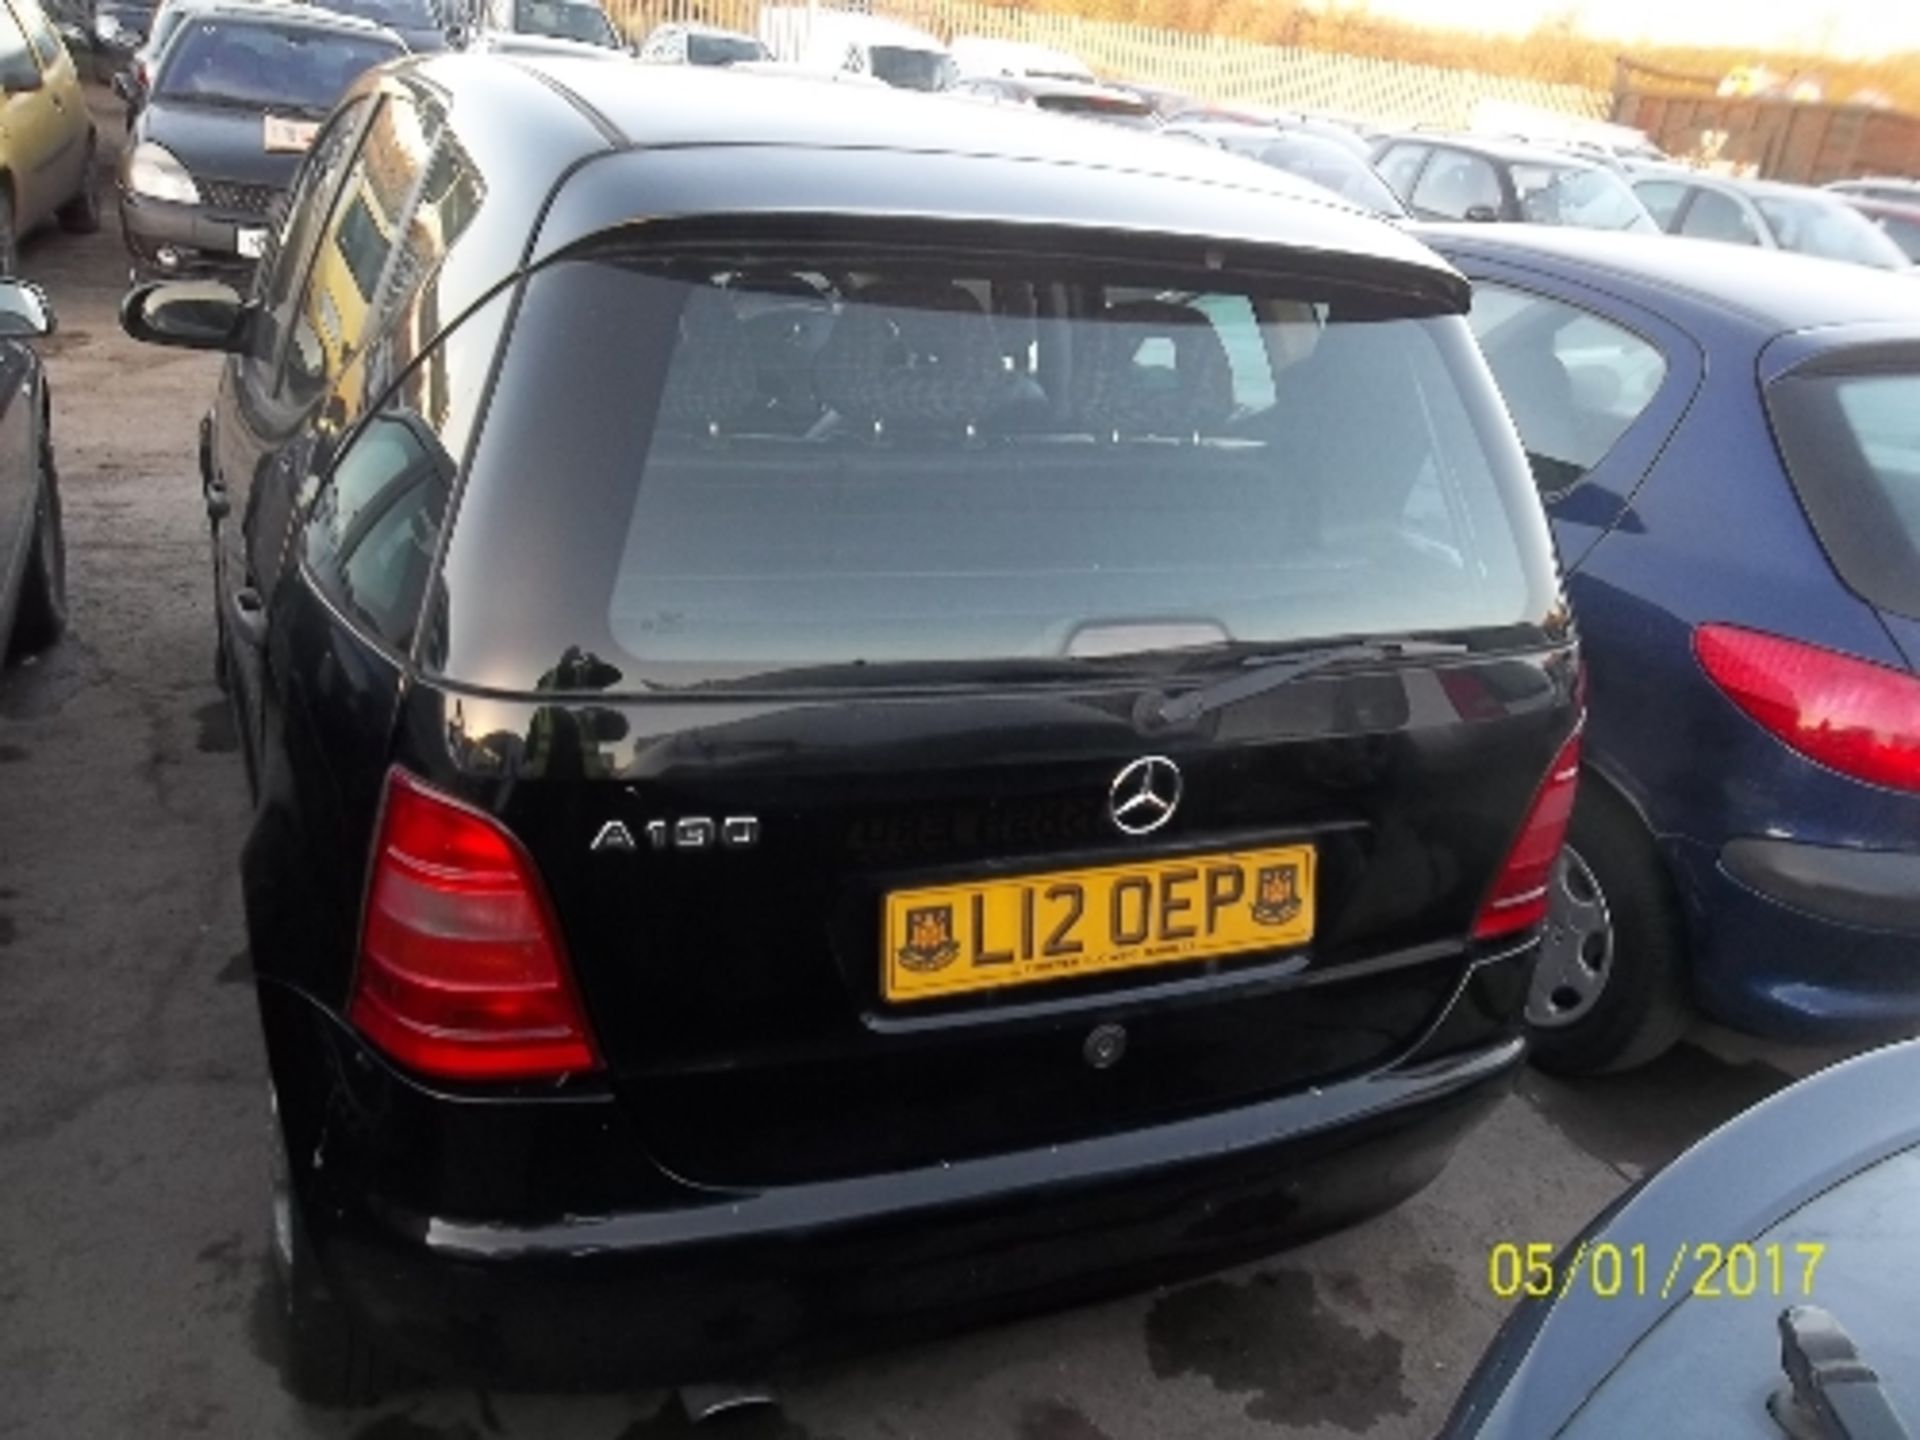 Mercedes A190 Avantgarde - L12 OEP Date of registration: 30.06.2000 1898cc, petrol, manual, black - Image 3 of 4